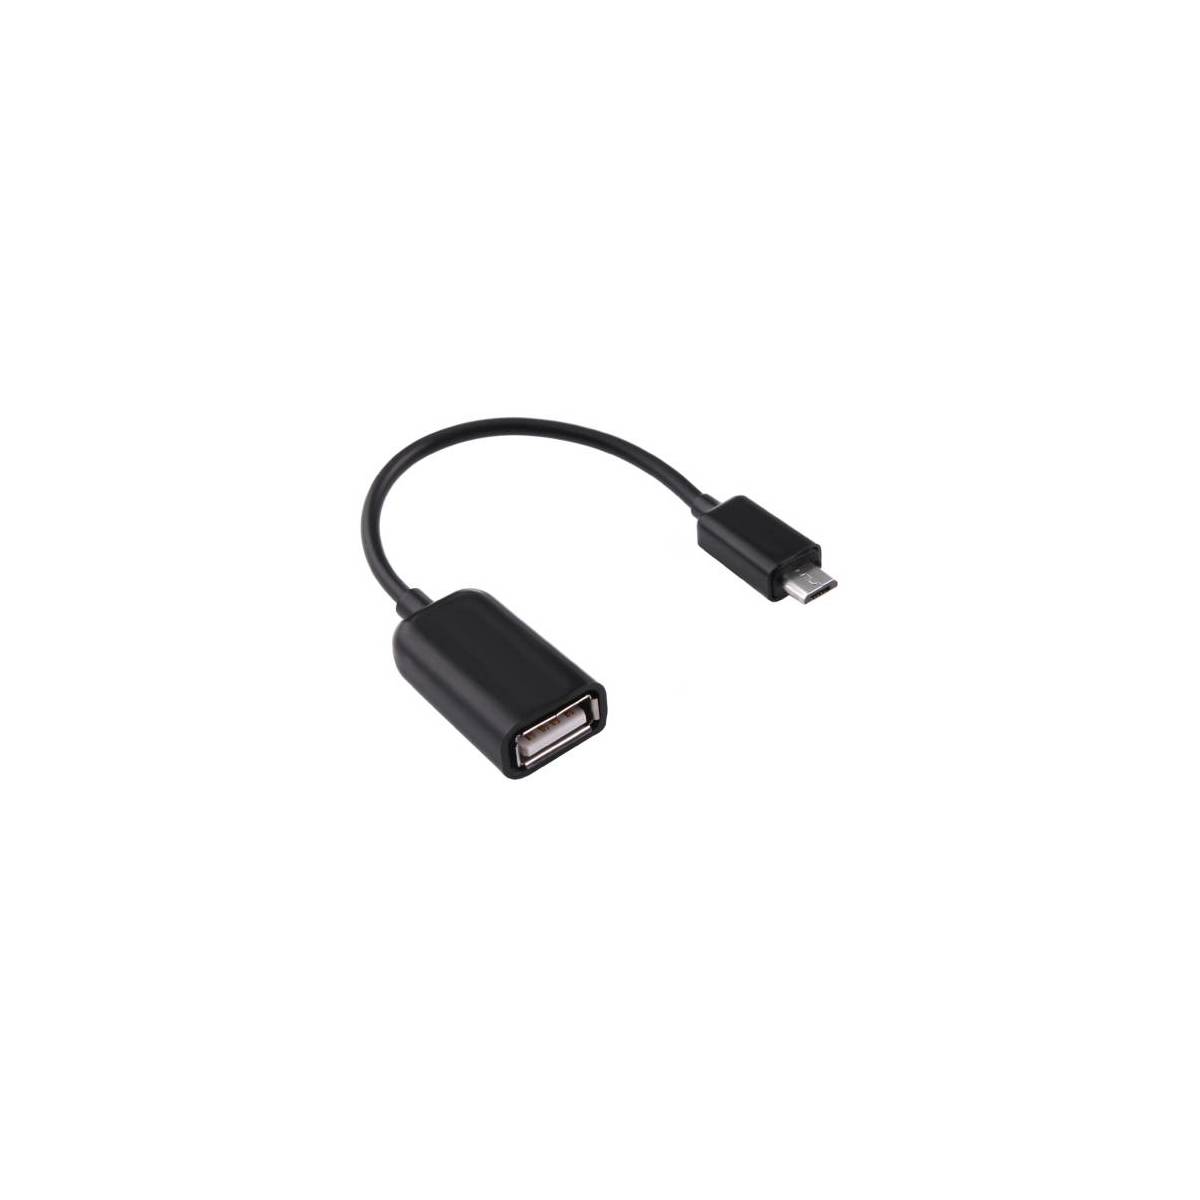 Cable OTG micro USB vers USB 2.0